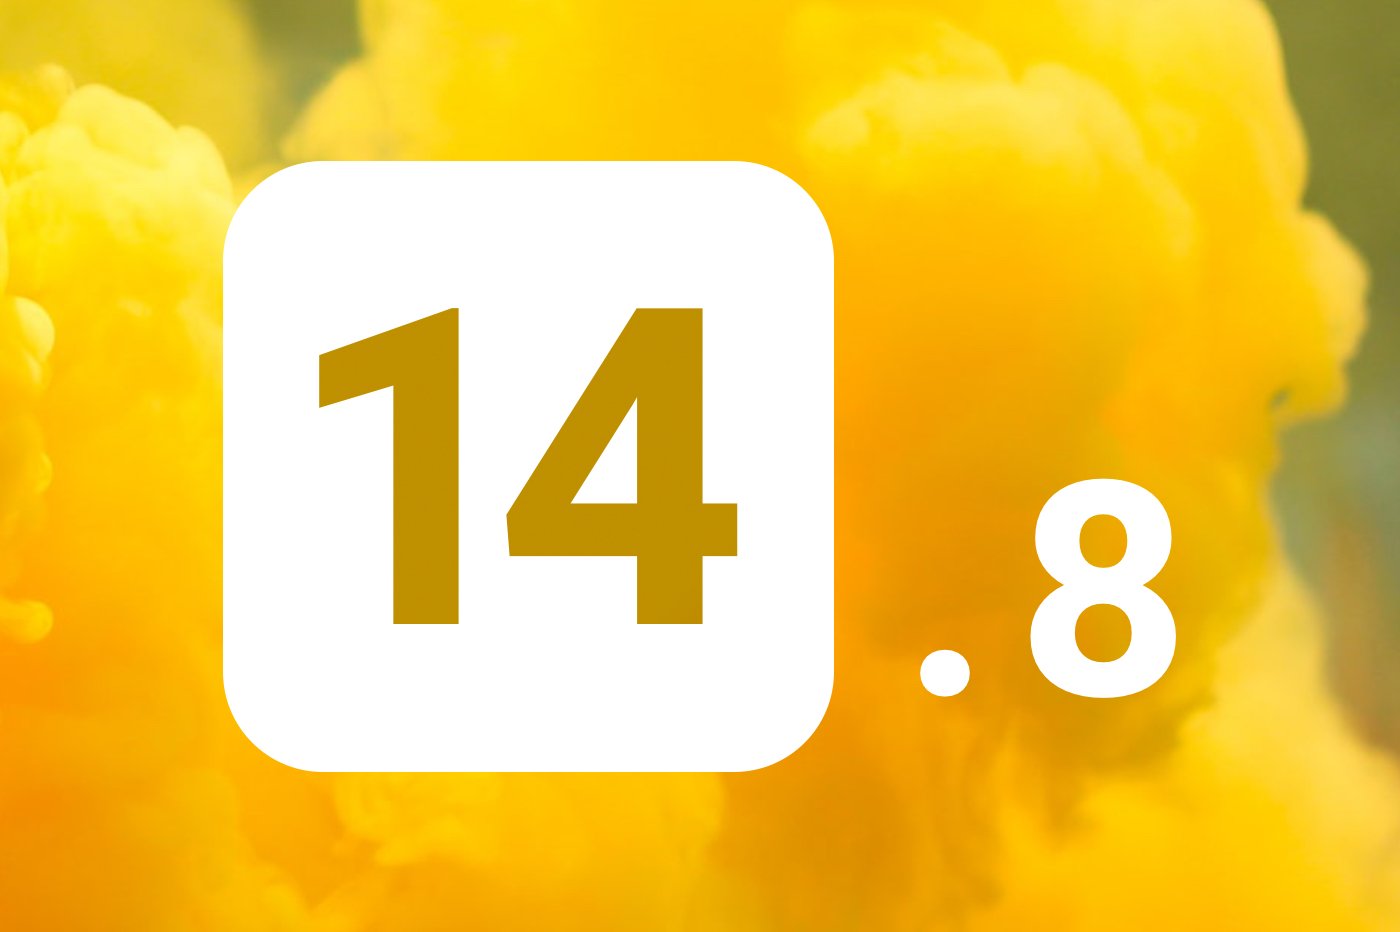 iOS 14.8 fond jaune